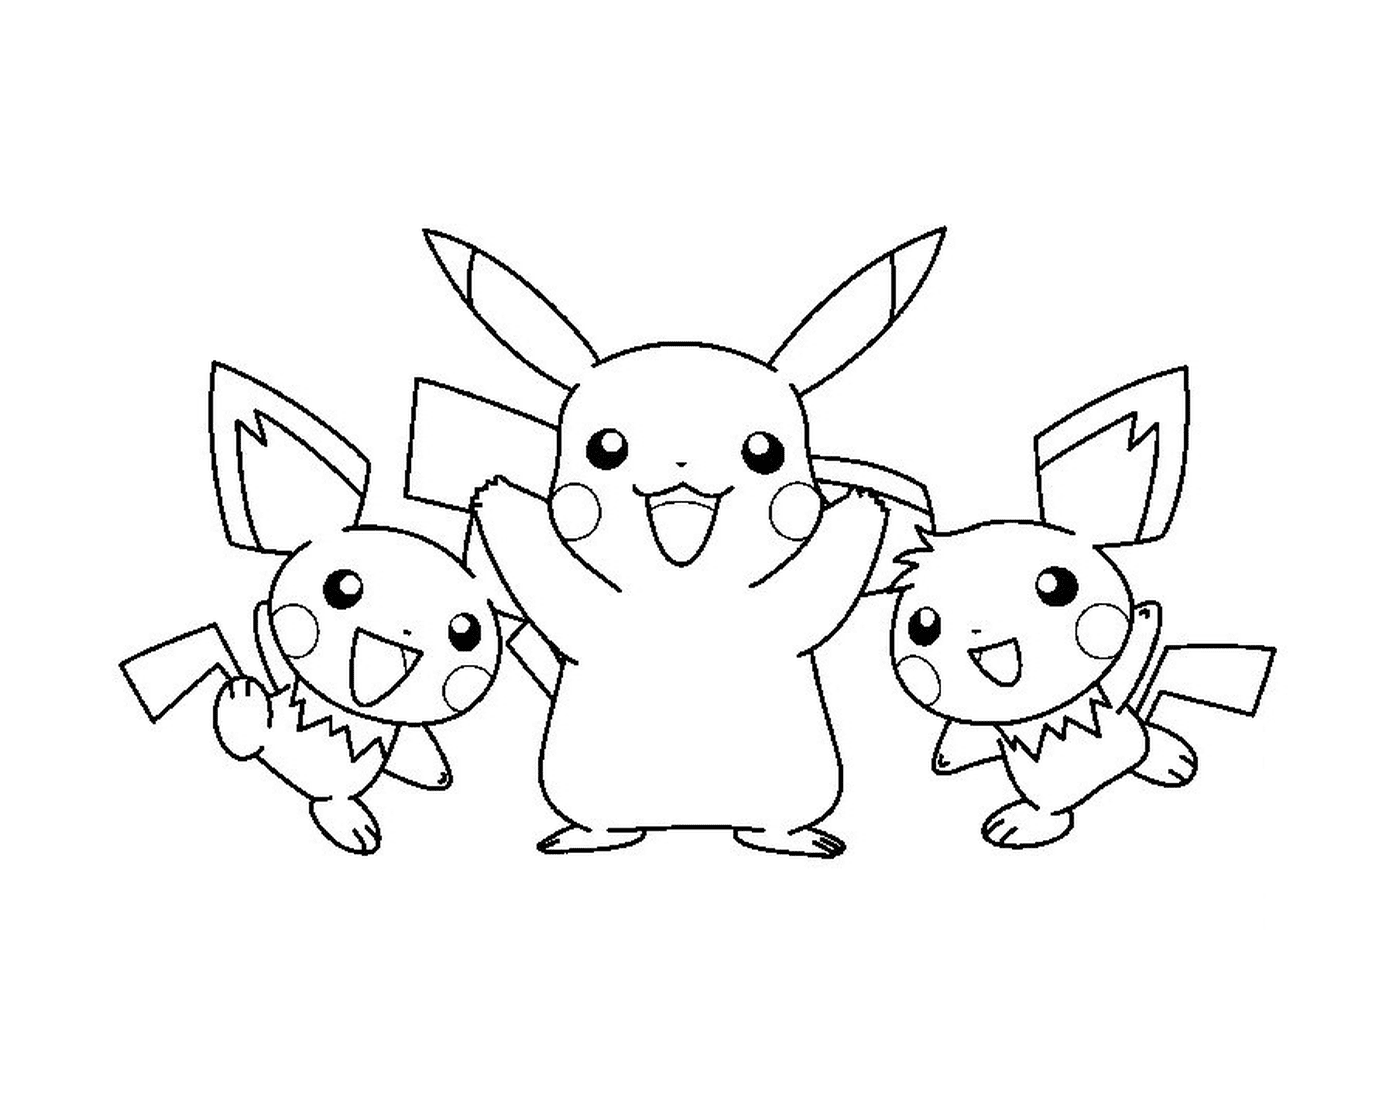  Tres Pokémons juntos 